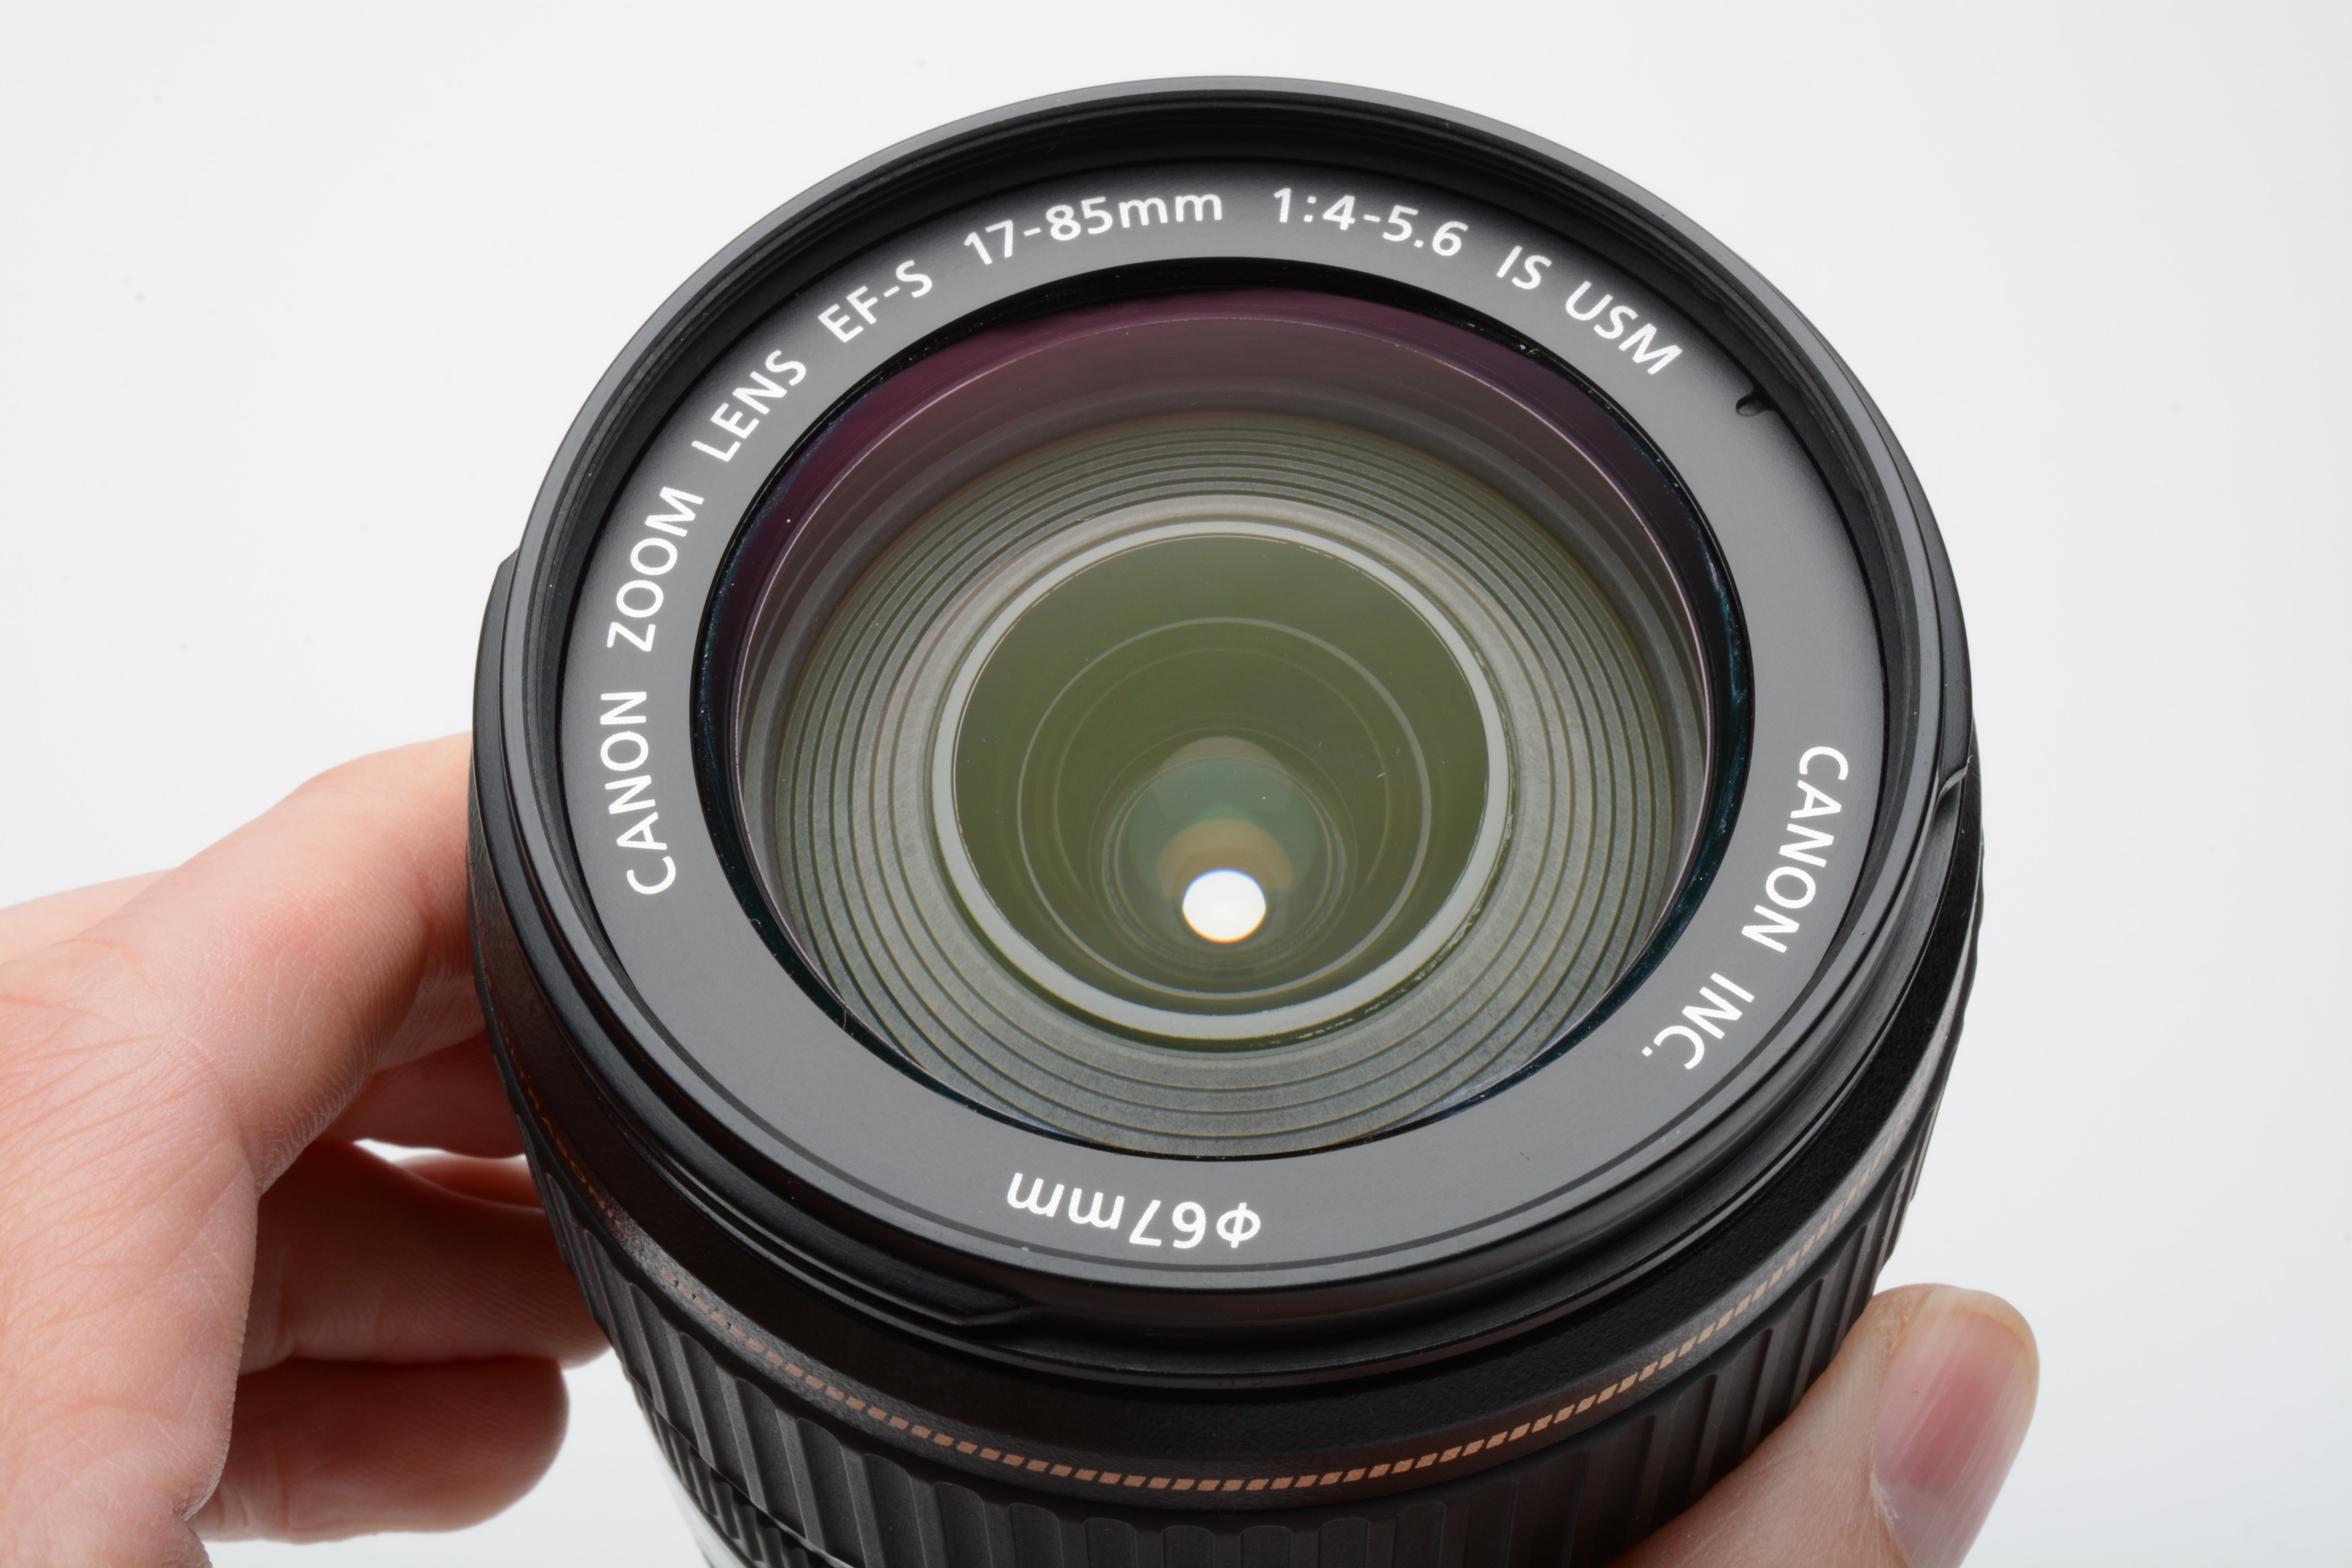 Canon EFS 17-85mm f4-5.6 IS USM zoom lens, caps, hood, nice 